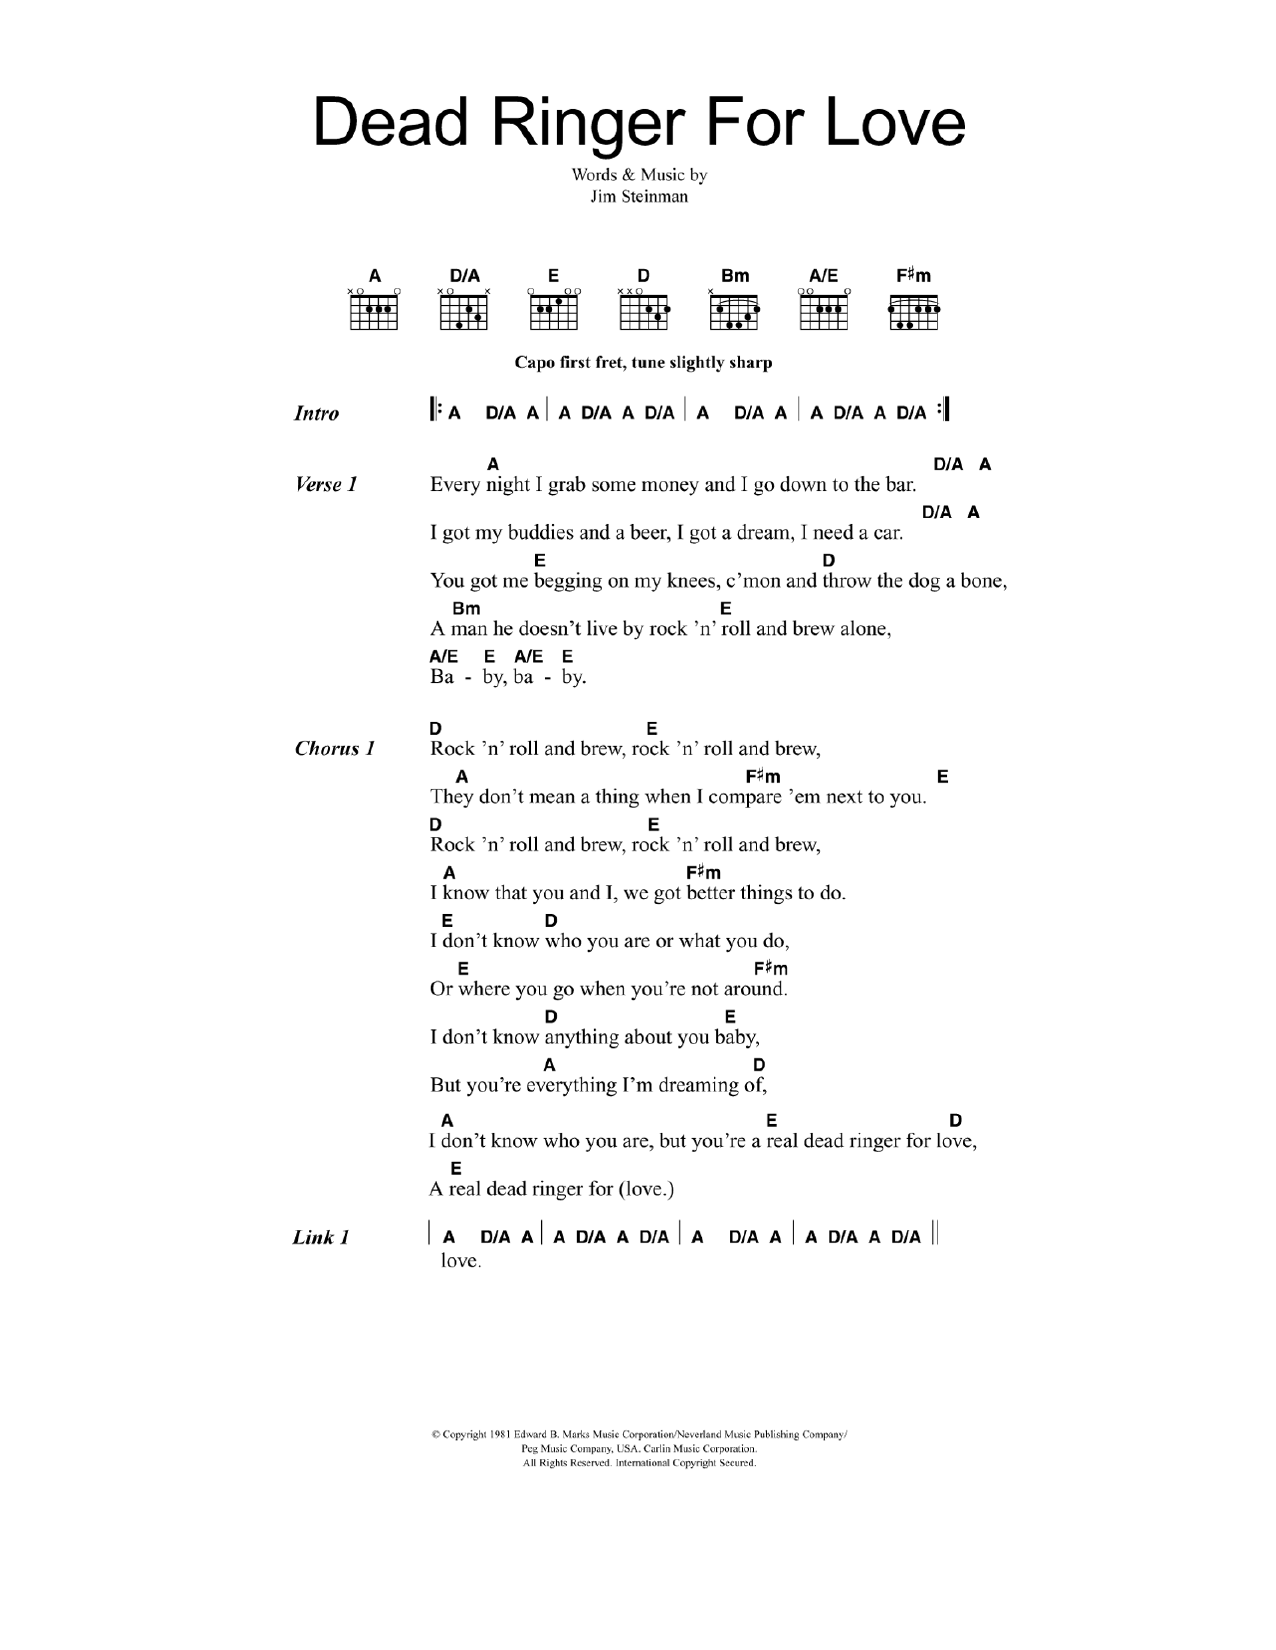 Cher Dead Ringer For Love Sheet Music Notes & Chords for Guitar Chords/Lyrics - Download or Print PDF